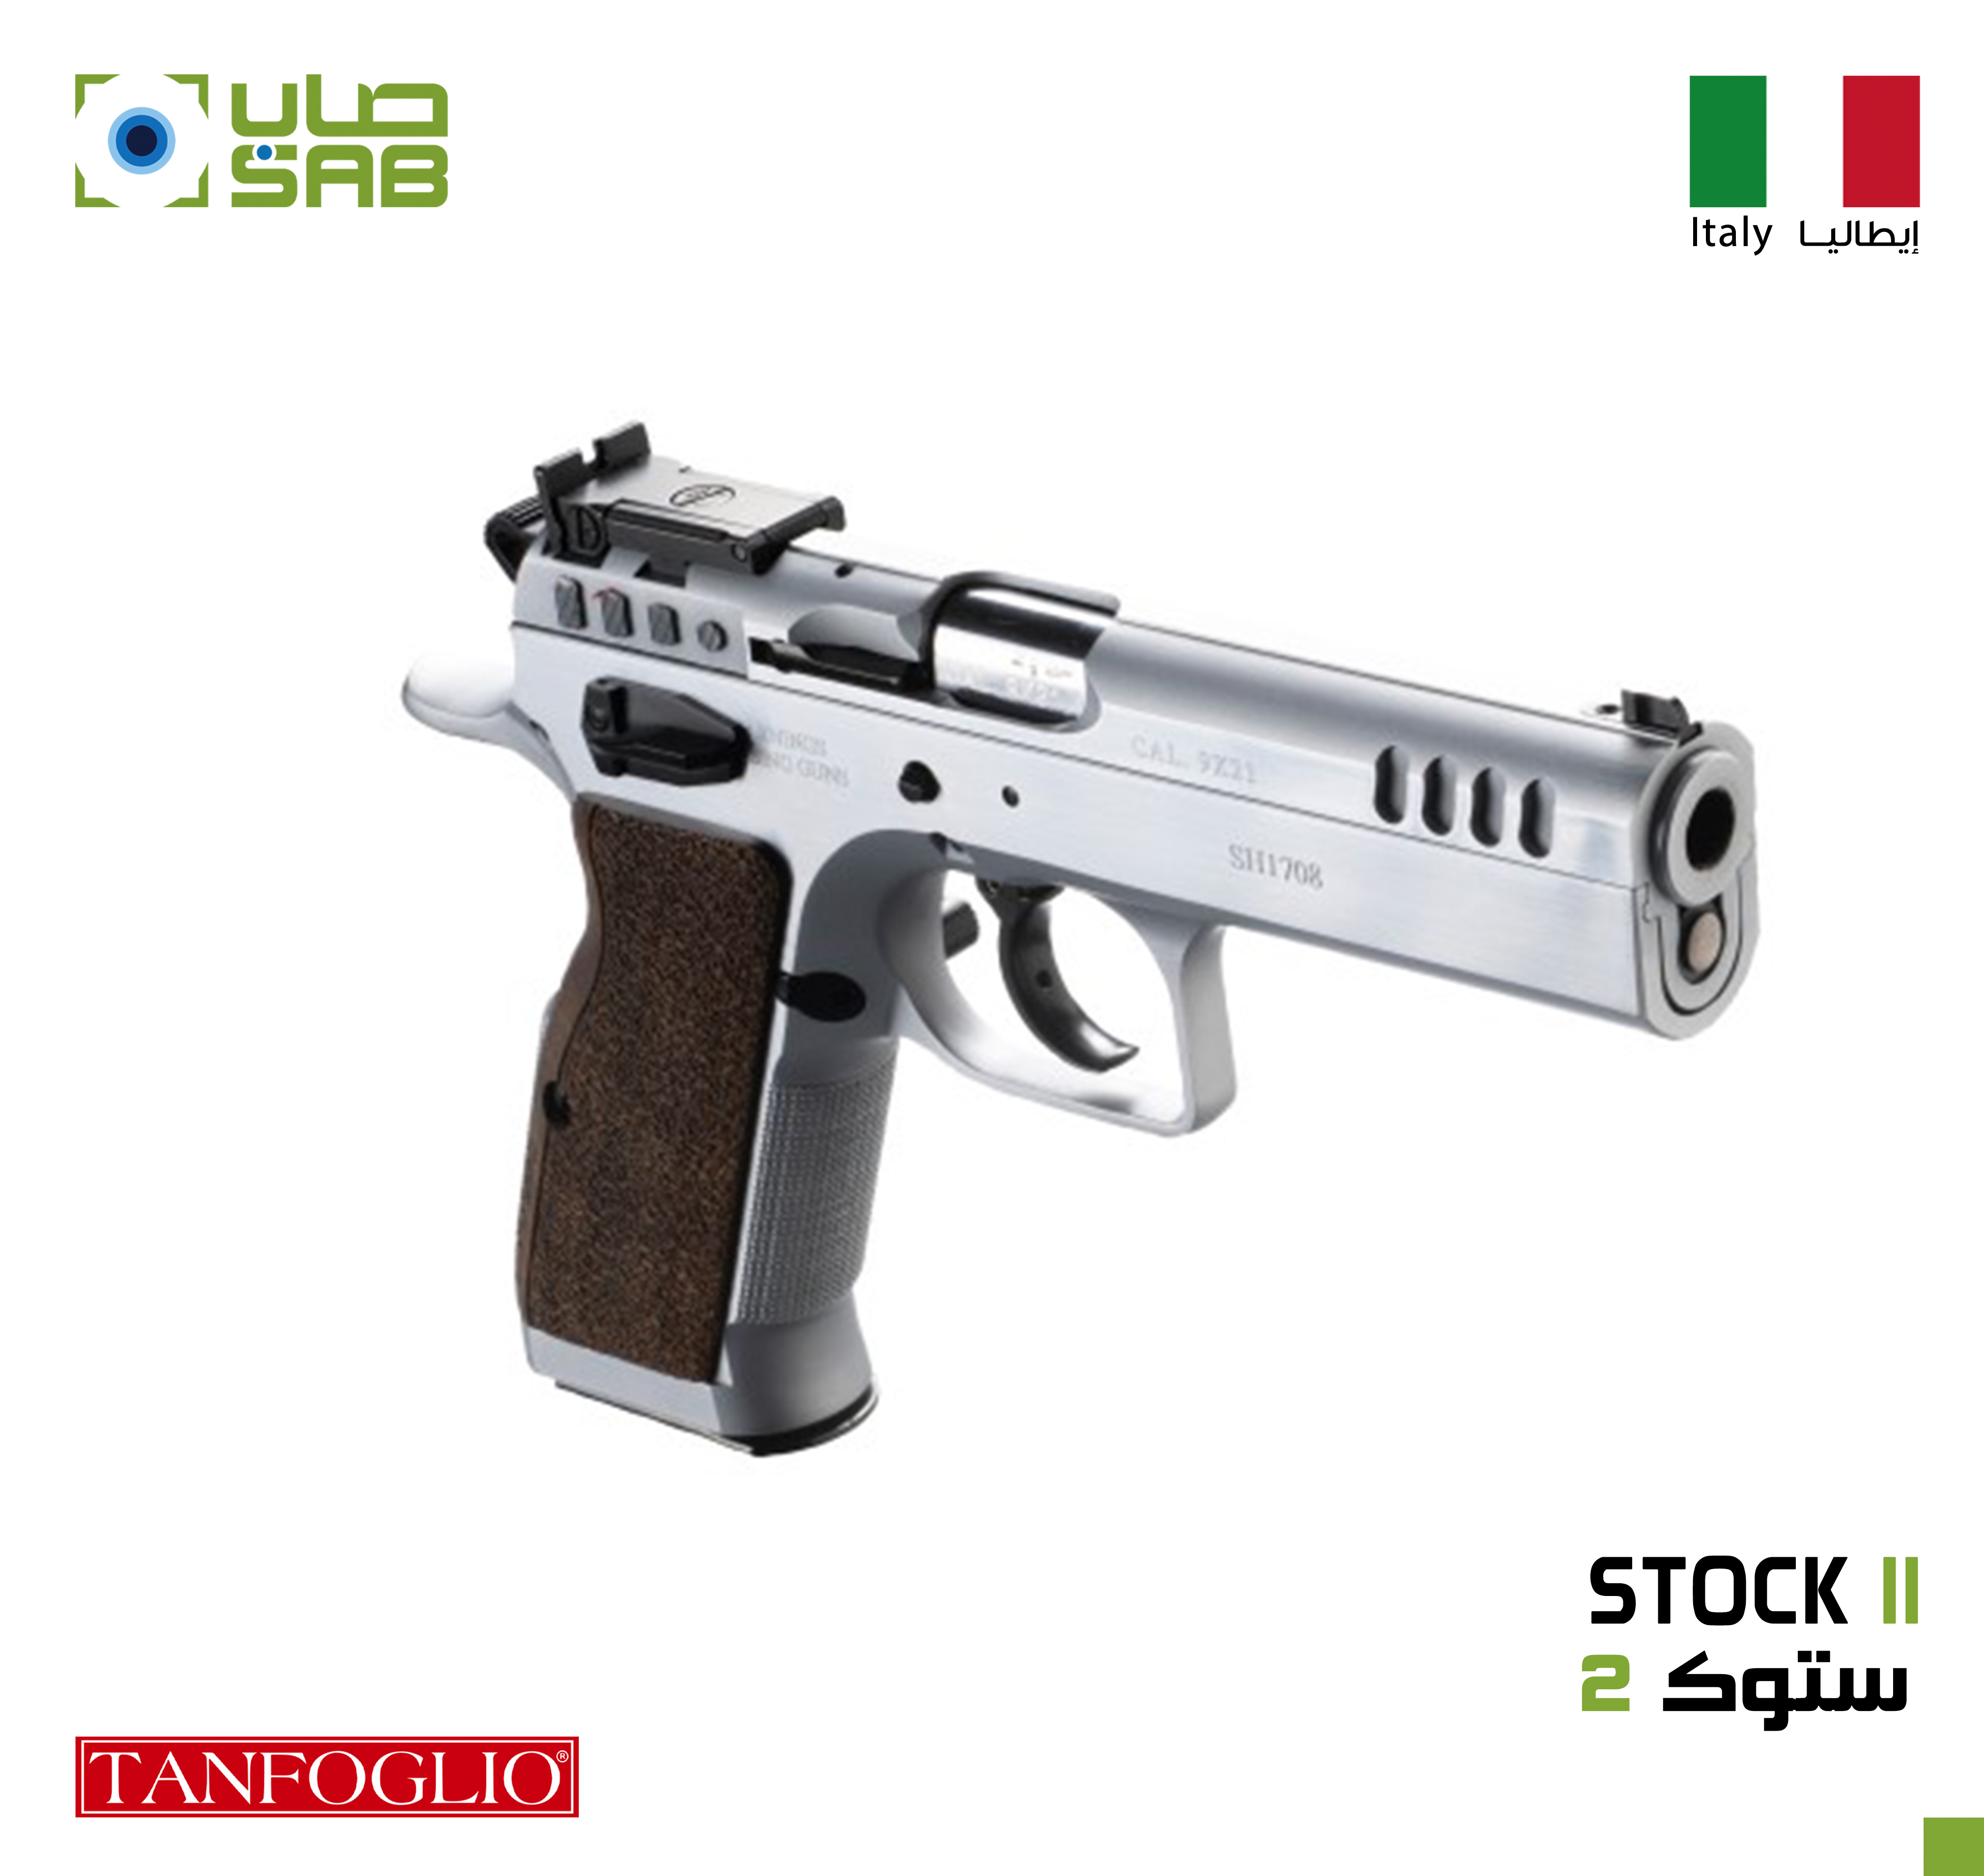  9mm - Tanfoglio - STOCK 2